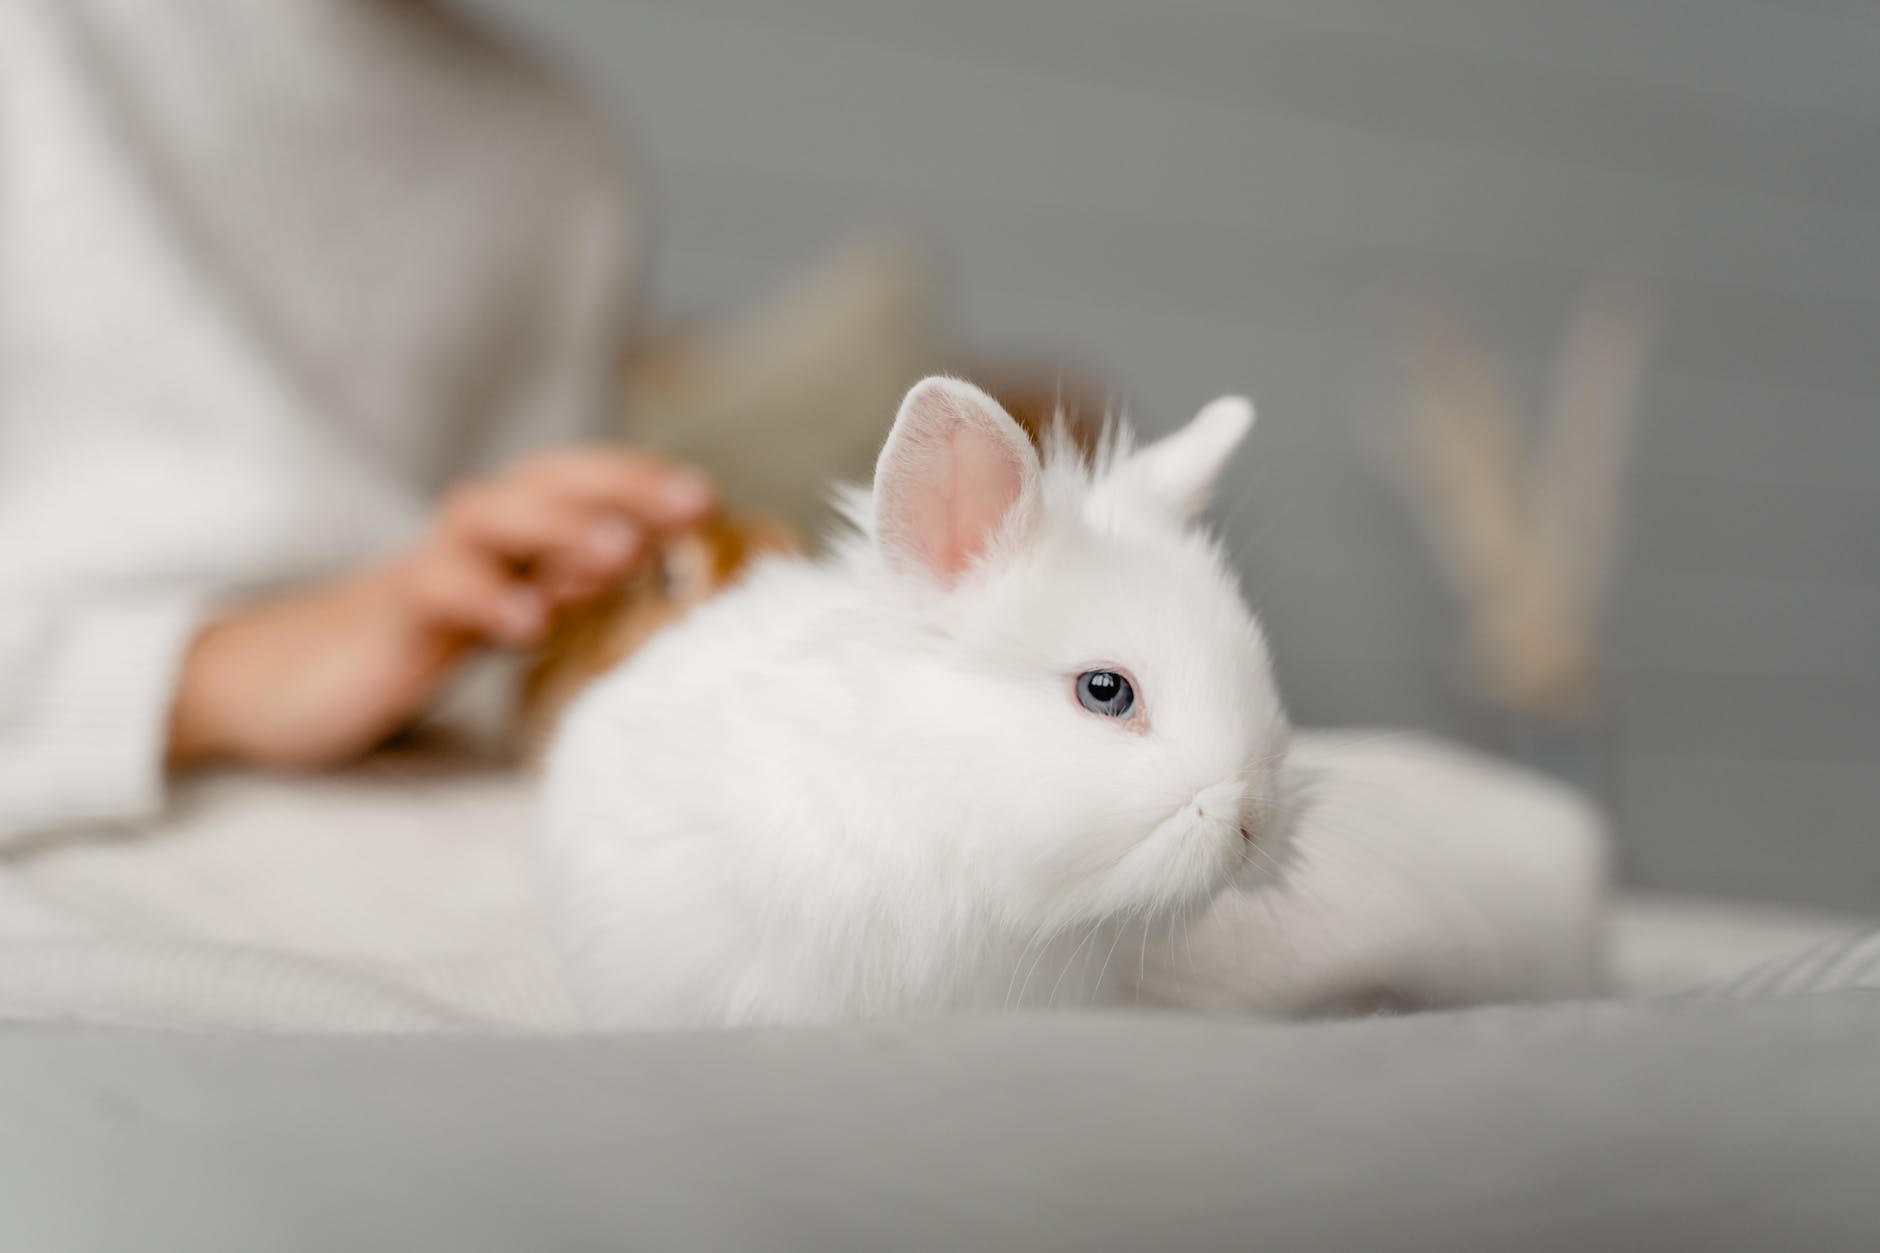 a white rabbit near a person